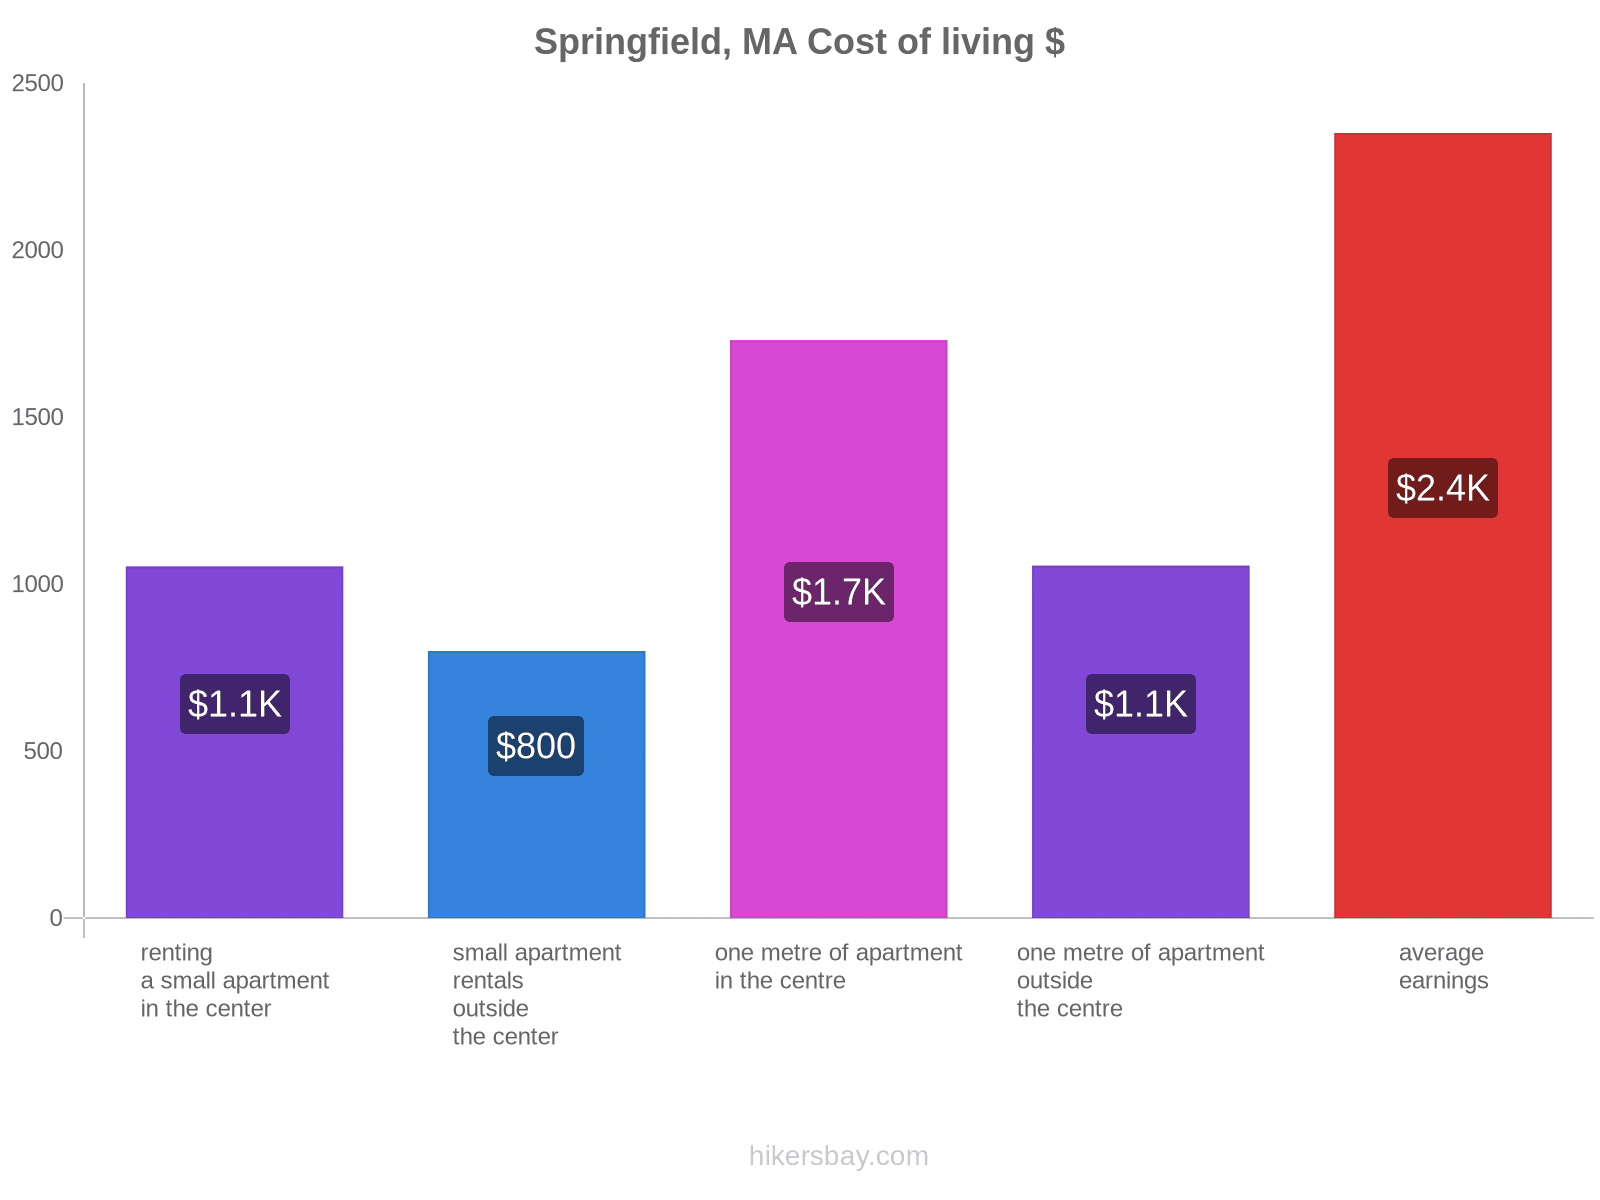 Springfield, MA cost of living hikersbay.com